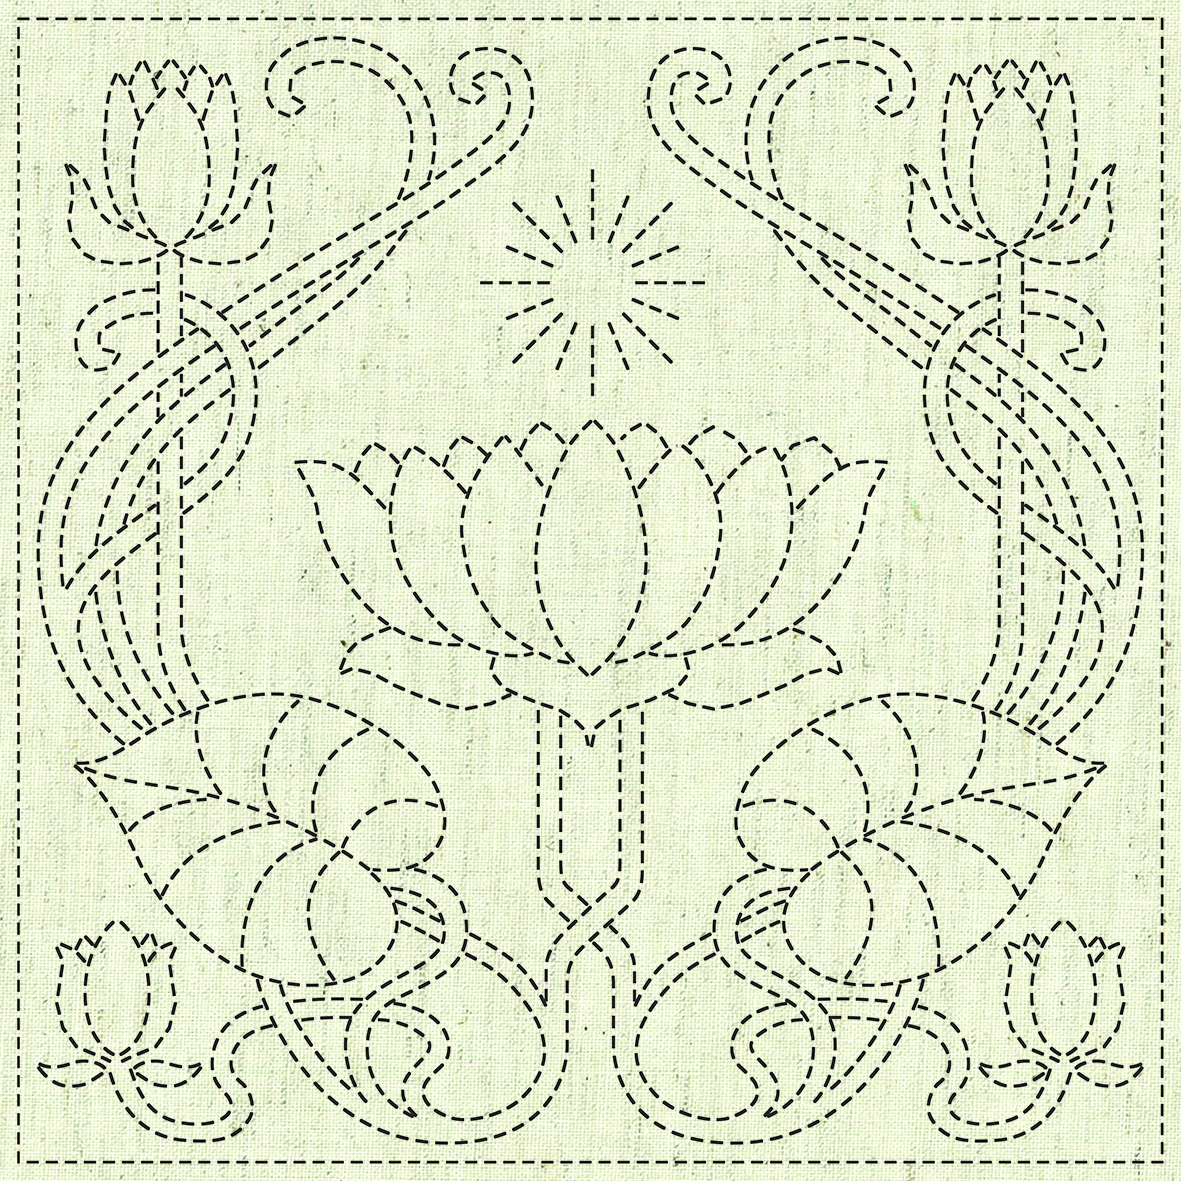 Green Tea and Sweet Beans Quilt Pattern Booklet | Jen Kingwell Designs  #JKD-5002